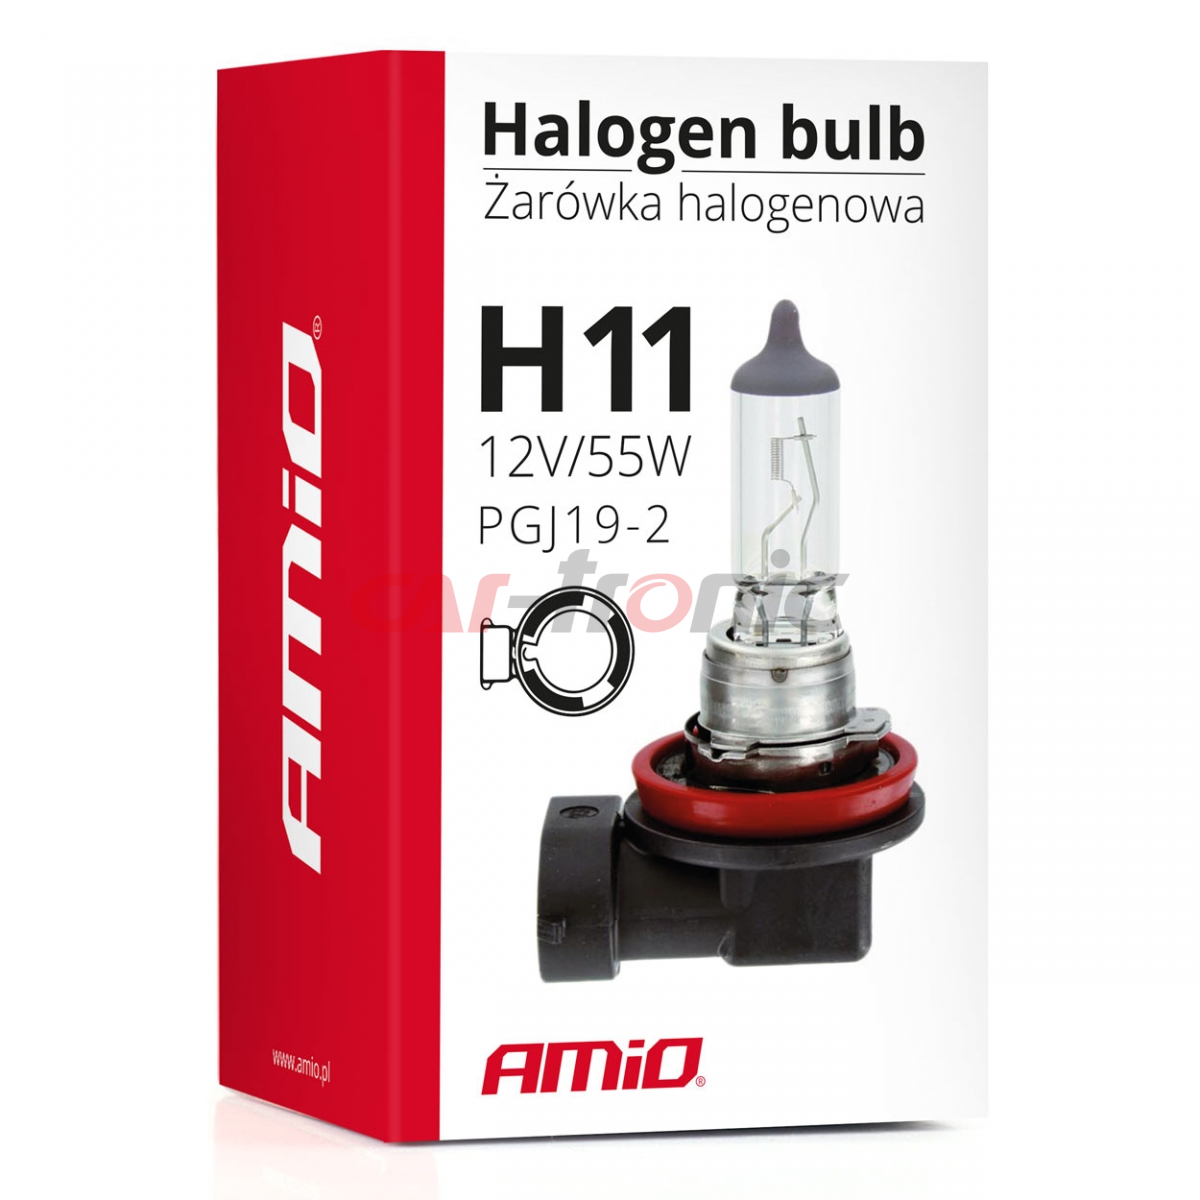 Żarówka halogenowa H11 12V 55W filtr UV (E4) AMIO-01159